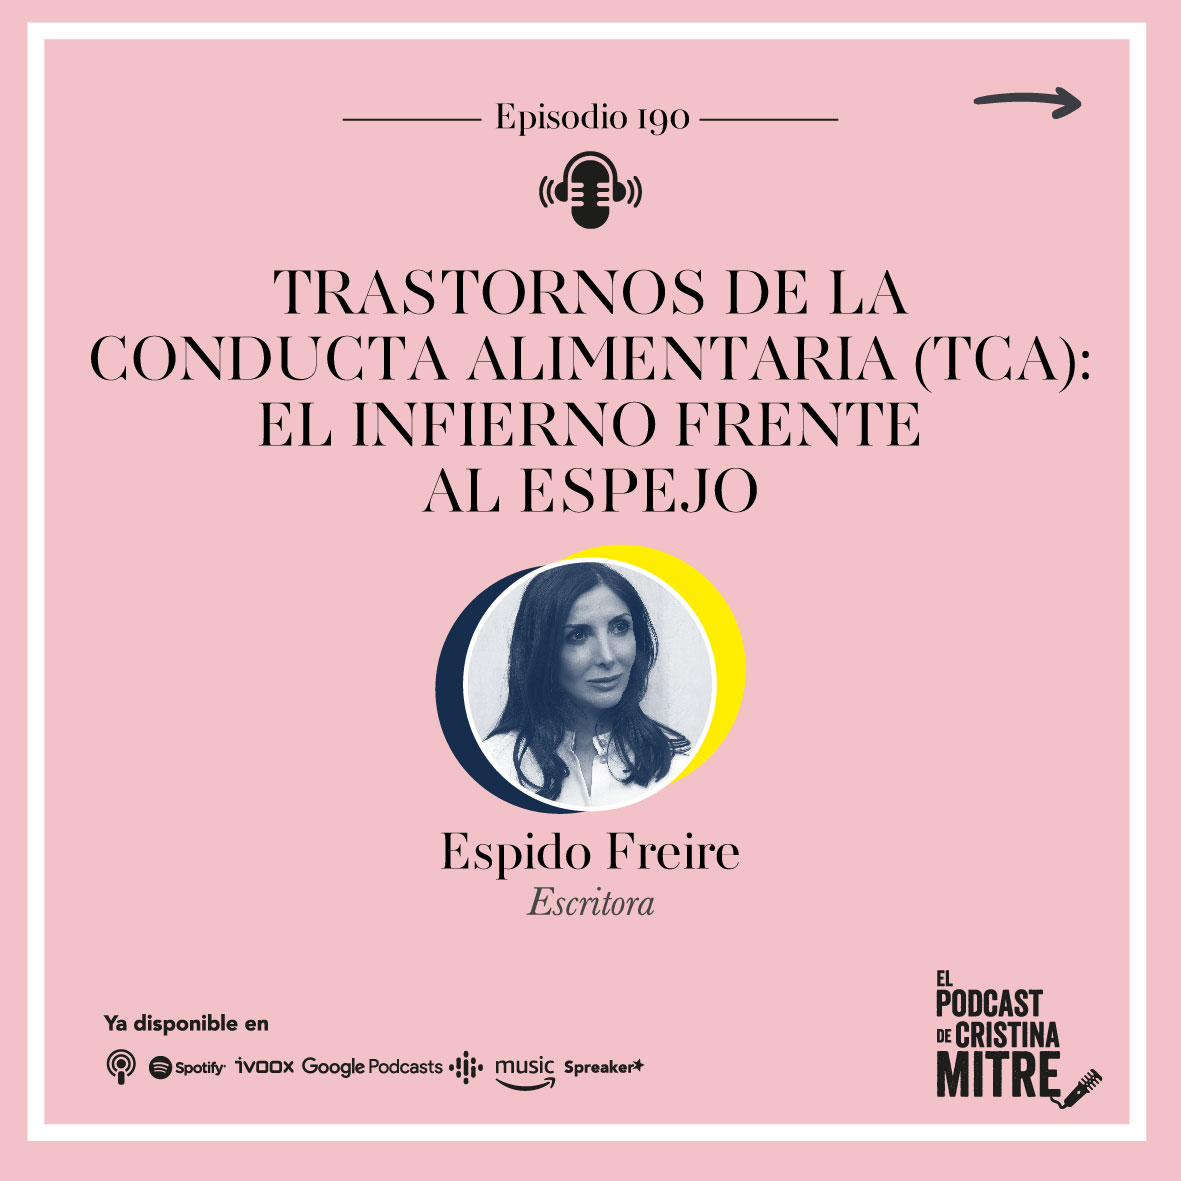 El podcast de Cristina Mitre Espido Freire Trastornos conducta alimentaria